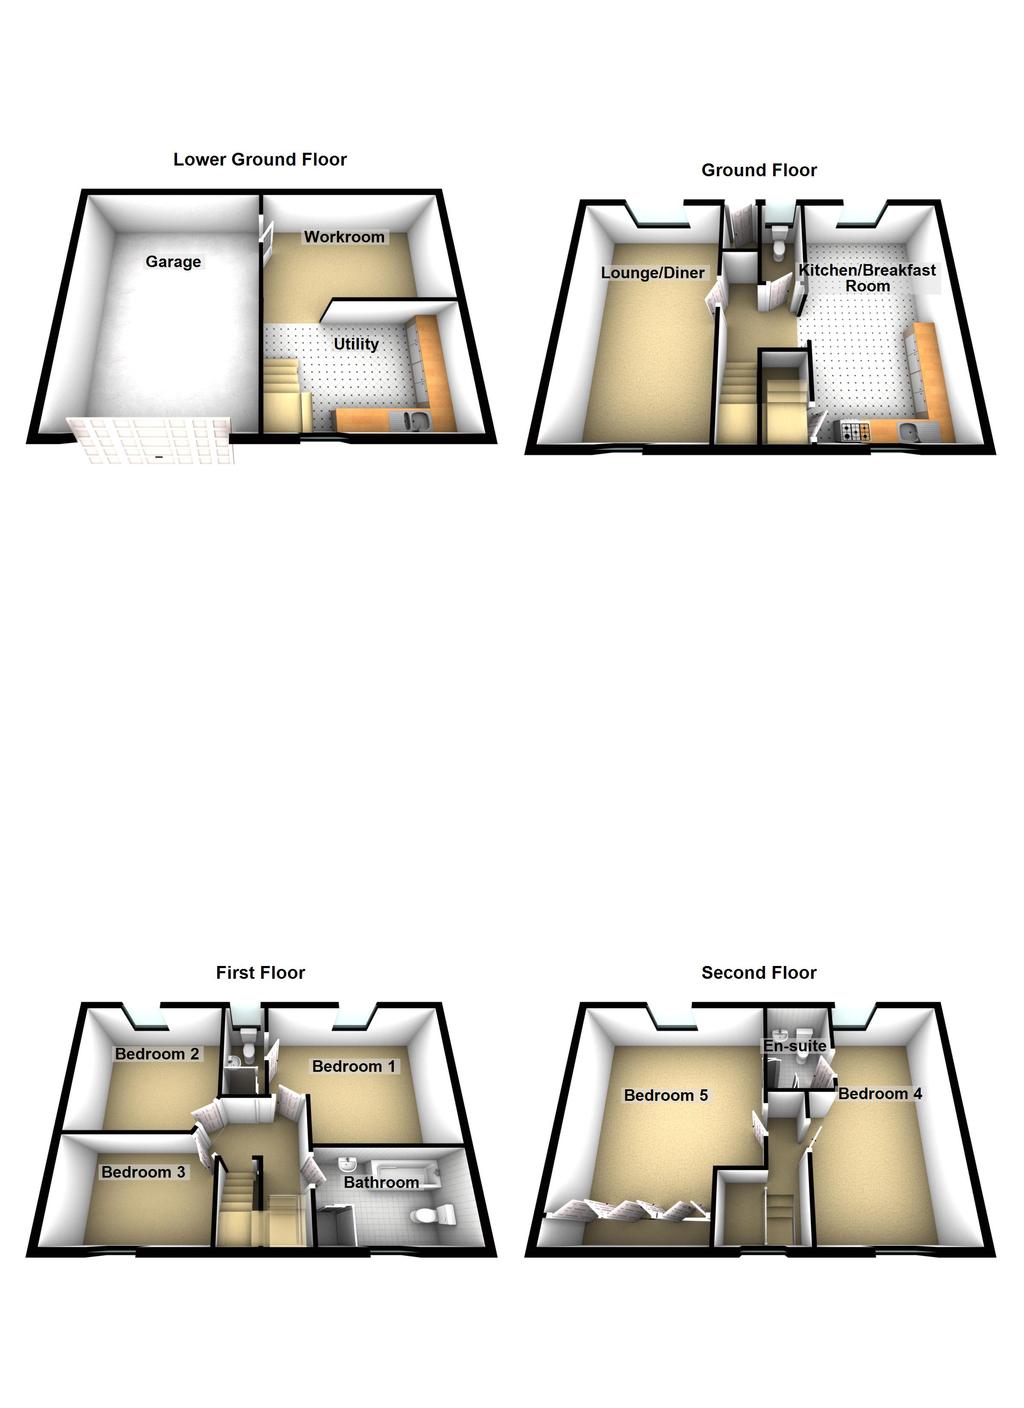 Property layout ROOM MEASUREMENTS Lounge Diner 11'4" (3.48 m) X 19'5" (5.94 m) Kitchen Diner 11'10" (3.61 m) X 19'5" (5.19 m) Utility 15'0" (4.59 m) X 8'2" (2.51 m) Work Area 14'7" (4.45 m) X 9 4 (2.